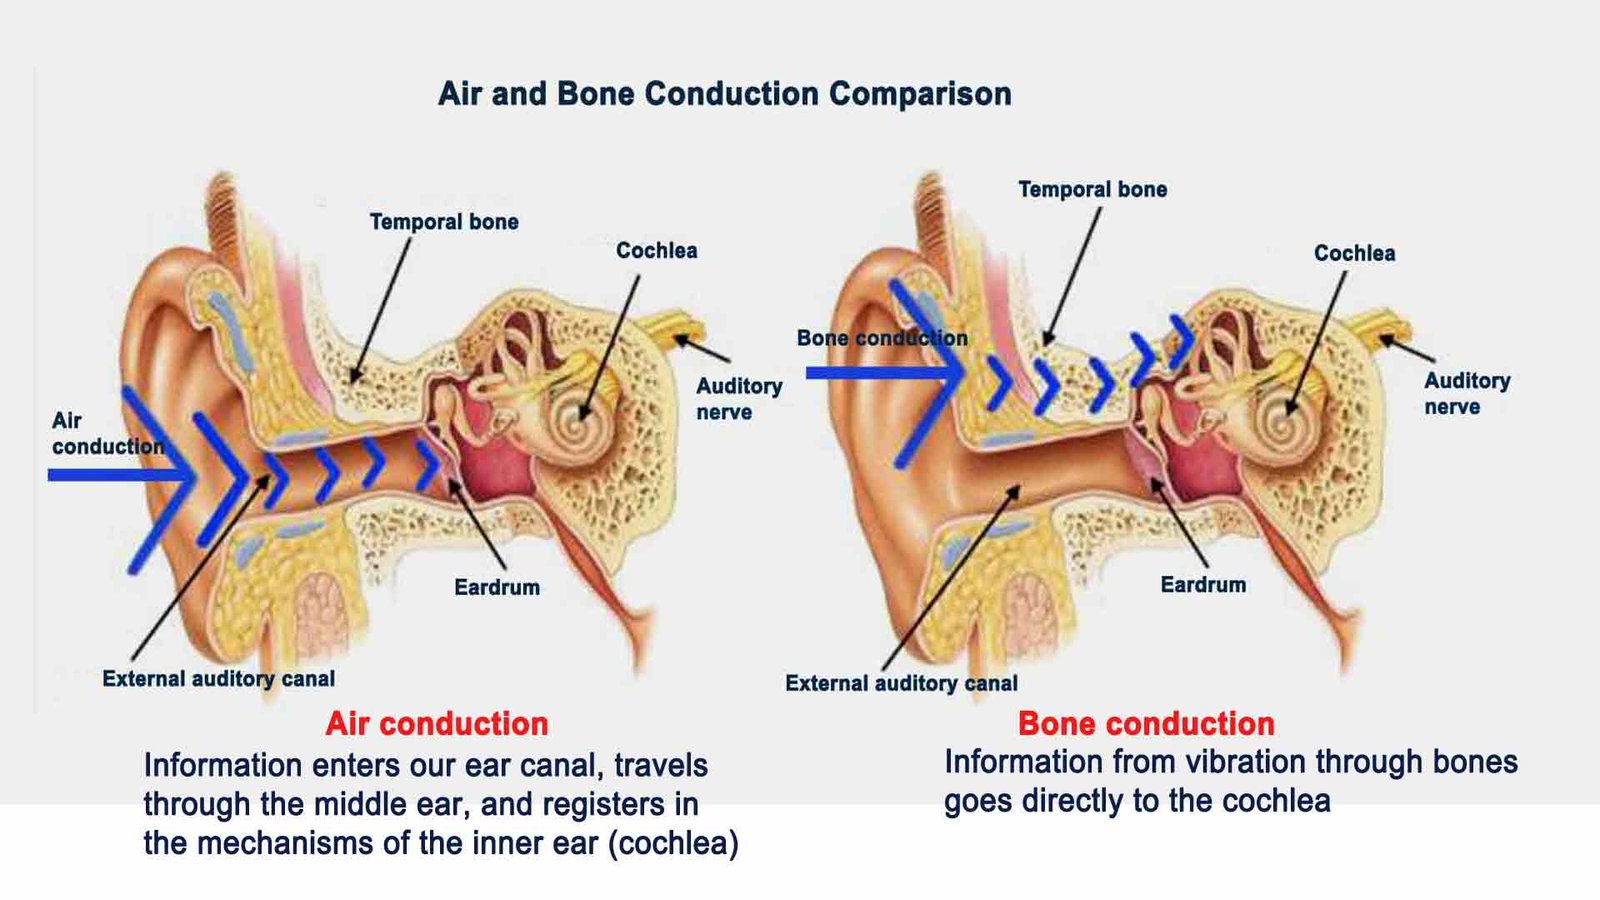 Air and bone conduction comparison